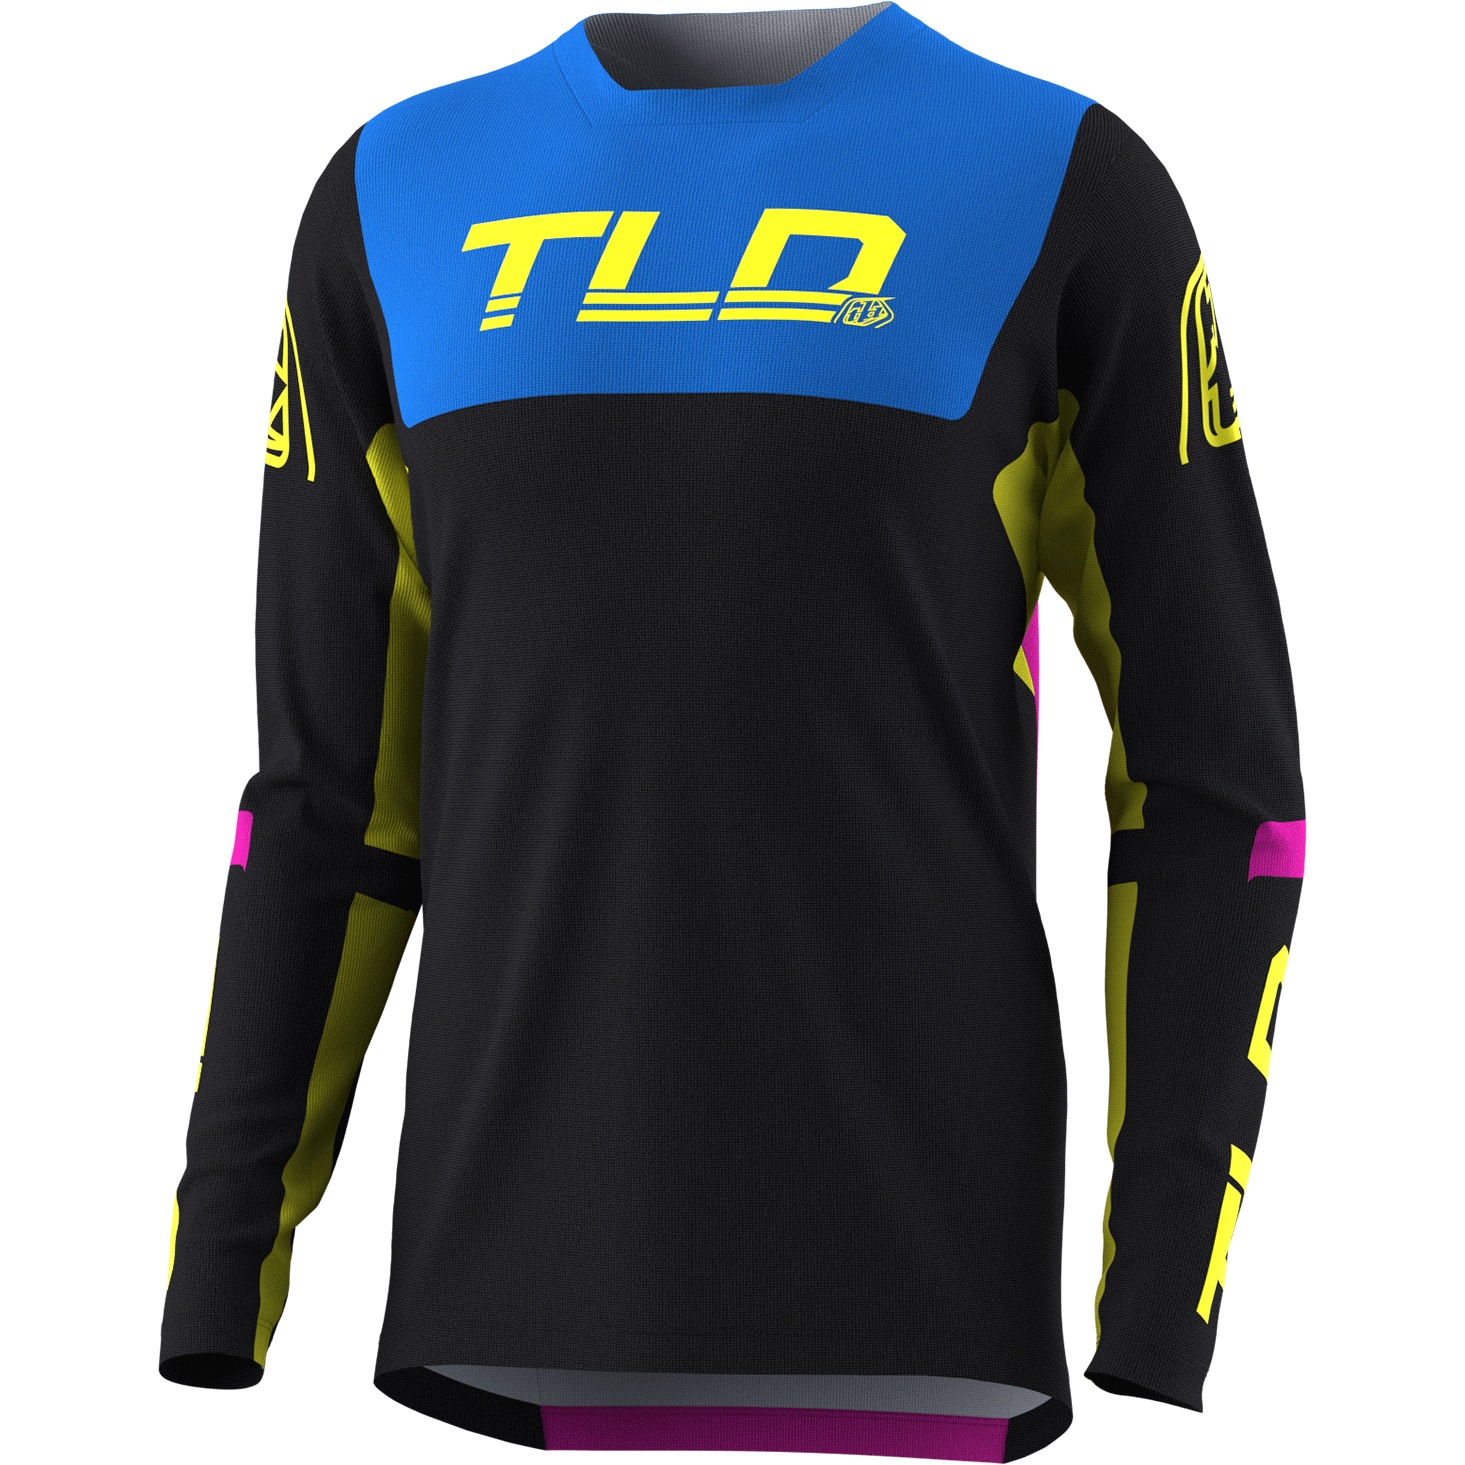 Productfoto van Troy Lee Designs Sprint Shirt - fractura black / yellow